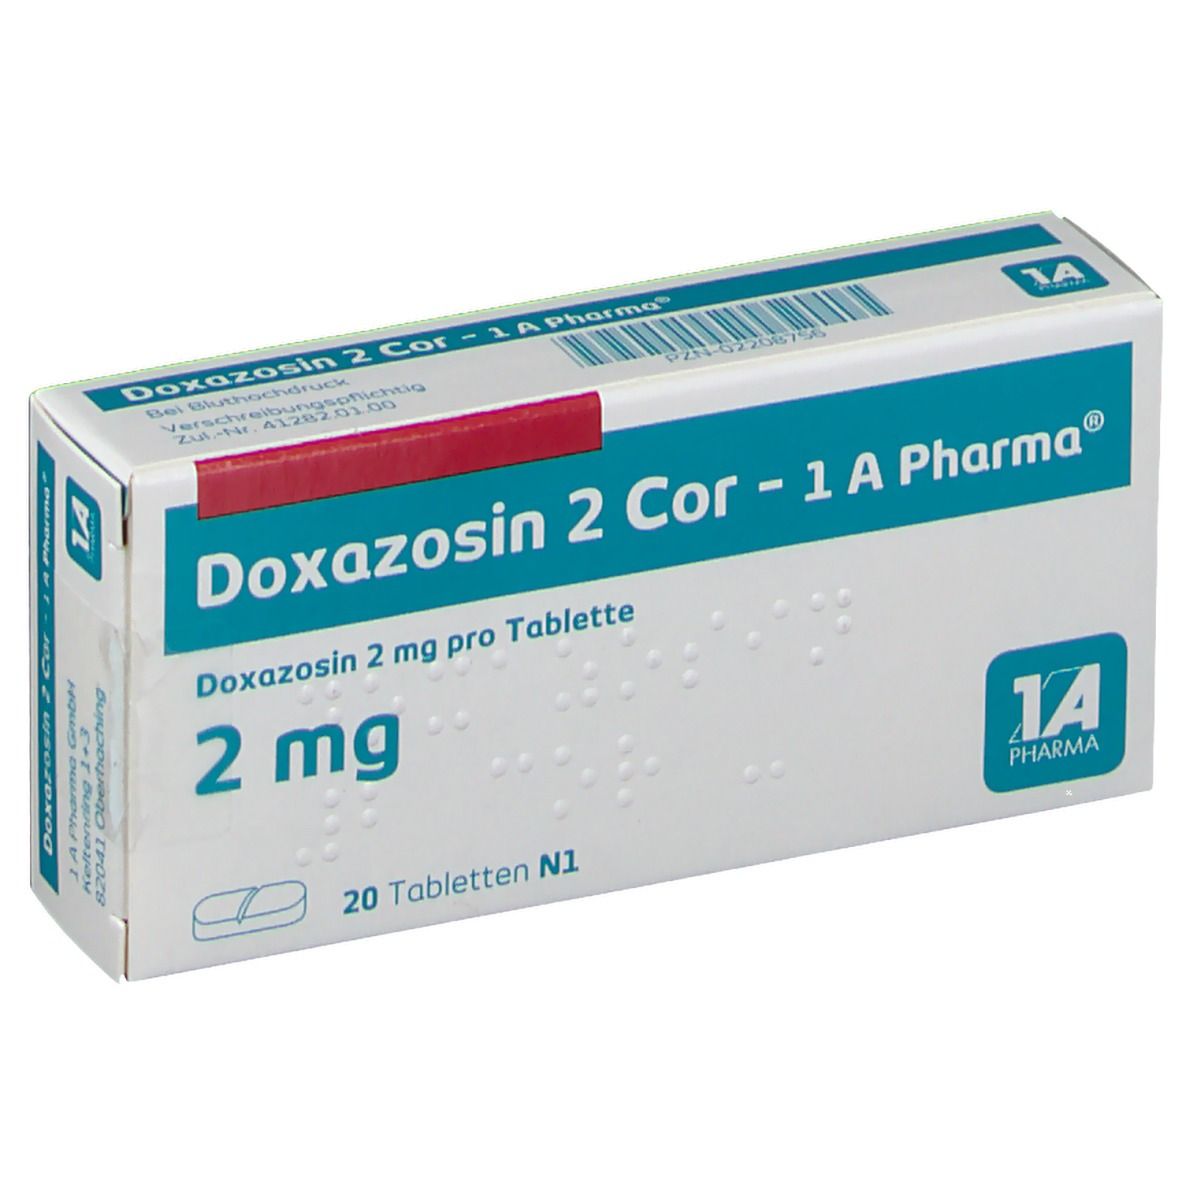 Doxazosin 2 Cor 1A Pharma®